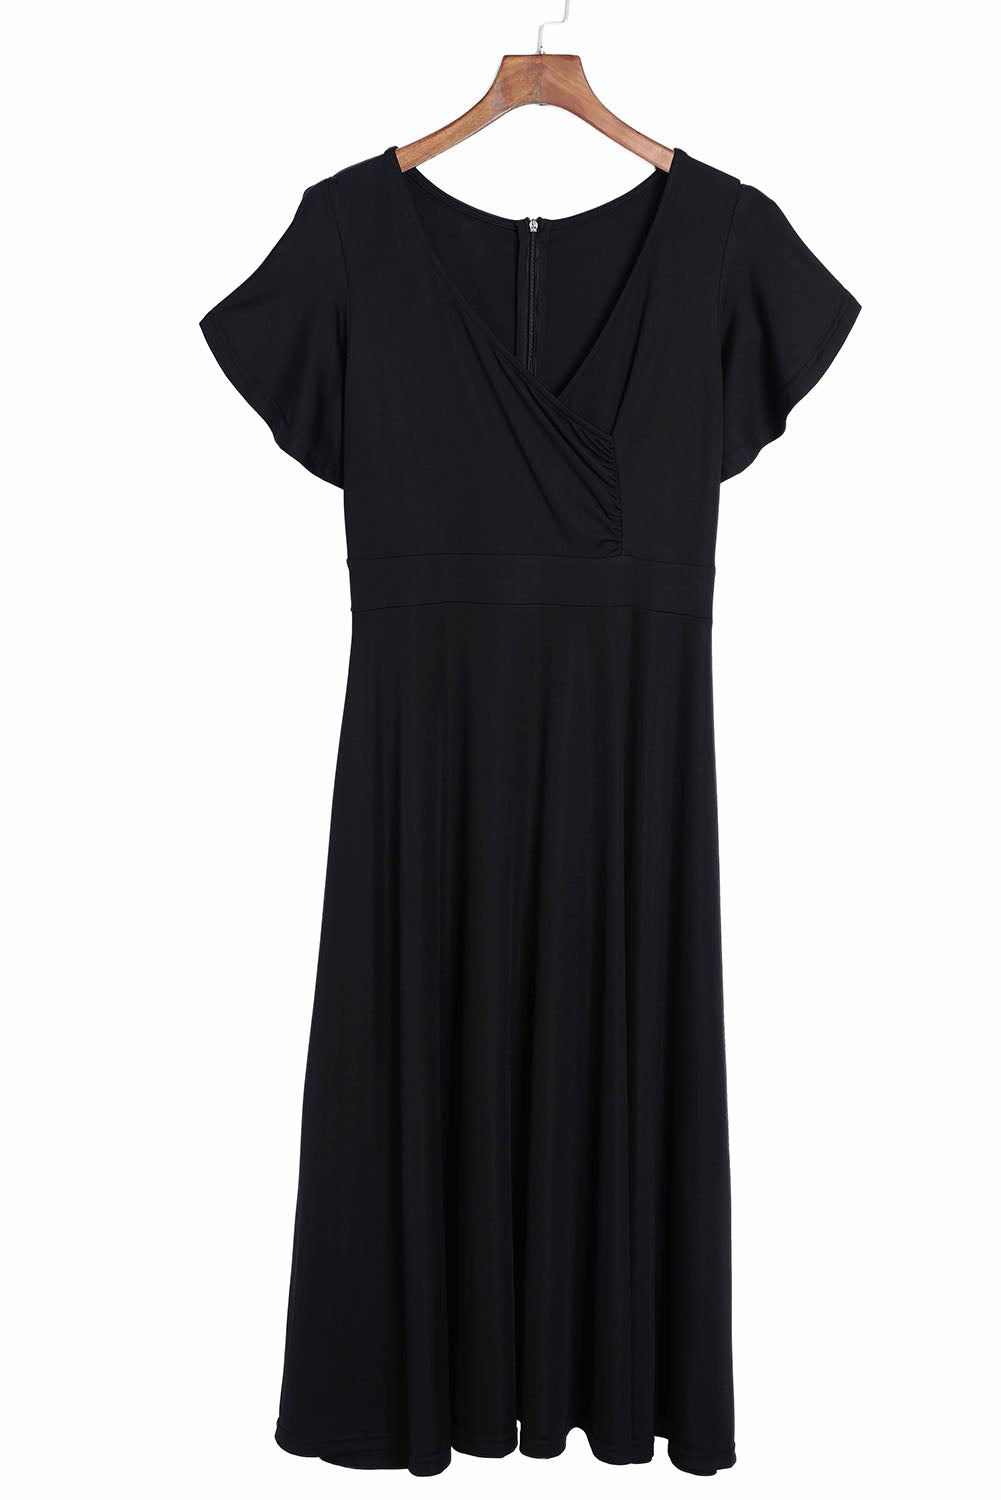 LC6110363-2-S, LC6110363-2-M, LC6110363-2-L, LC6110363-2-XL, LC6110363-2-2XL, Black Womens V Neck Ruffle Sleeve Wrap Dress Midi Dress Cocktail Party Dress